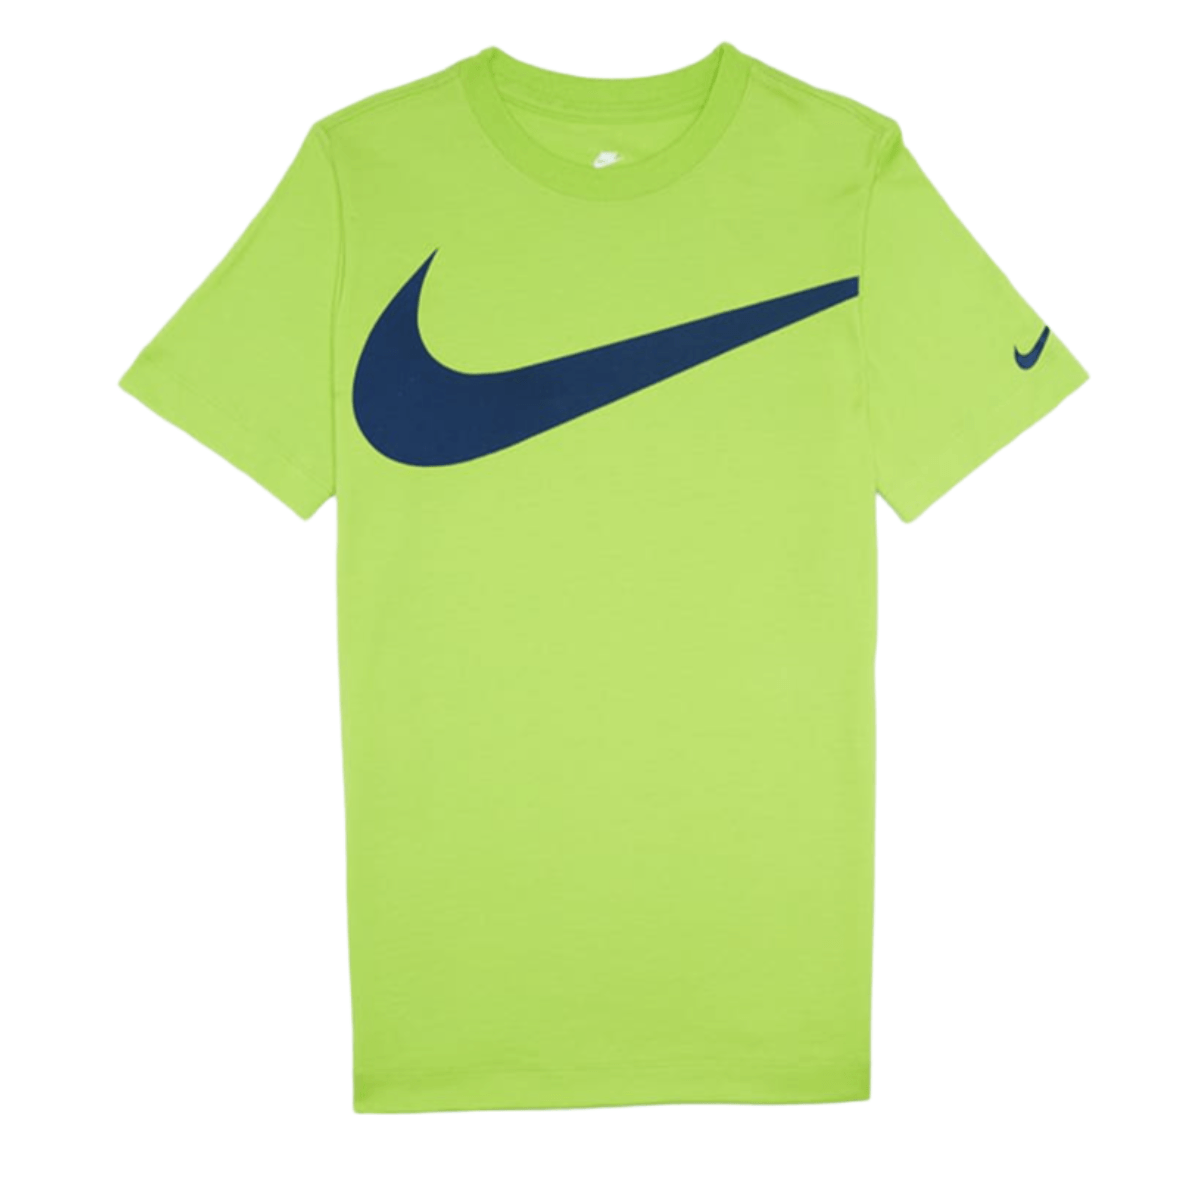 Nike Sportswear Tee - Boys'